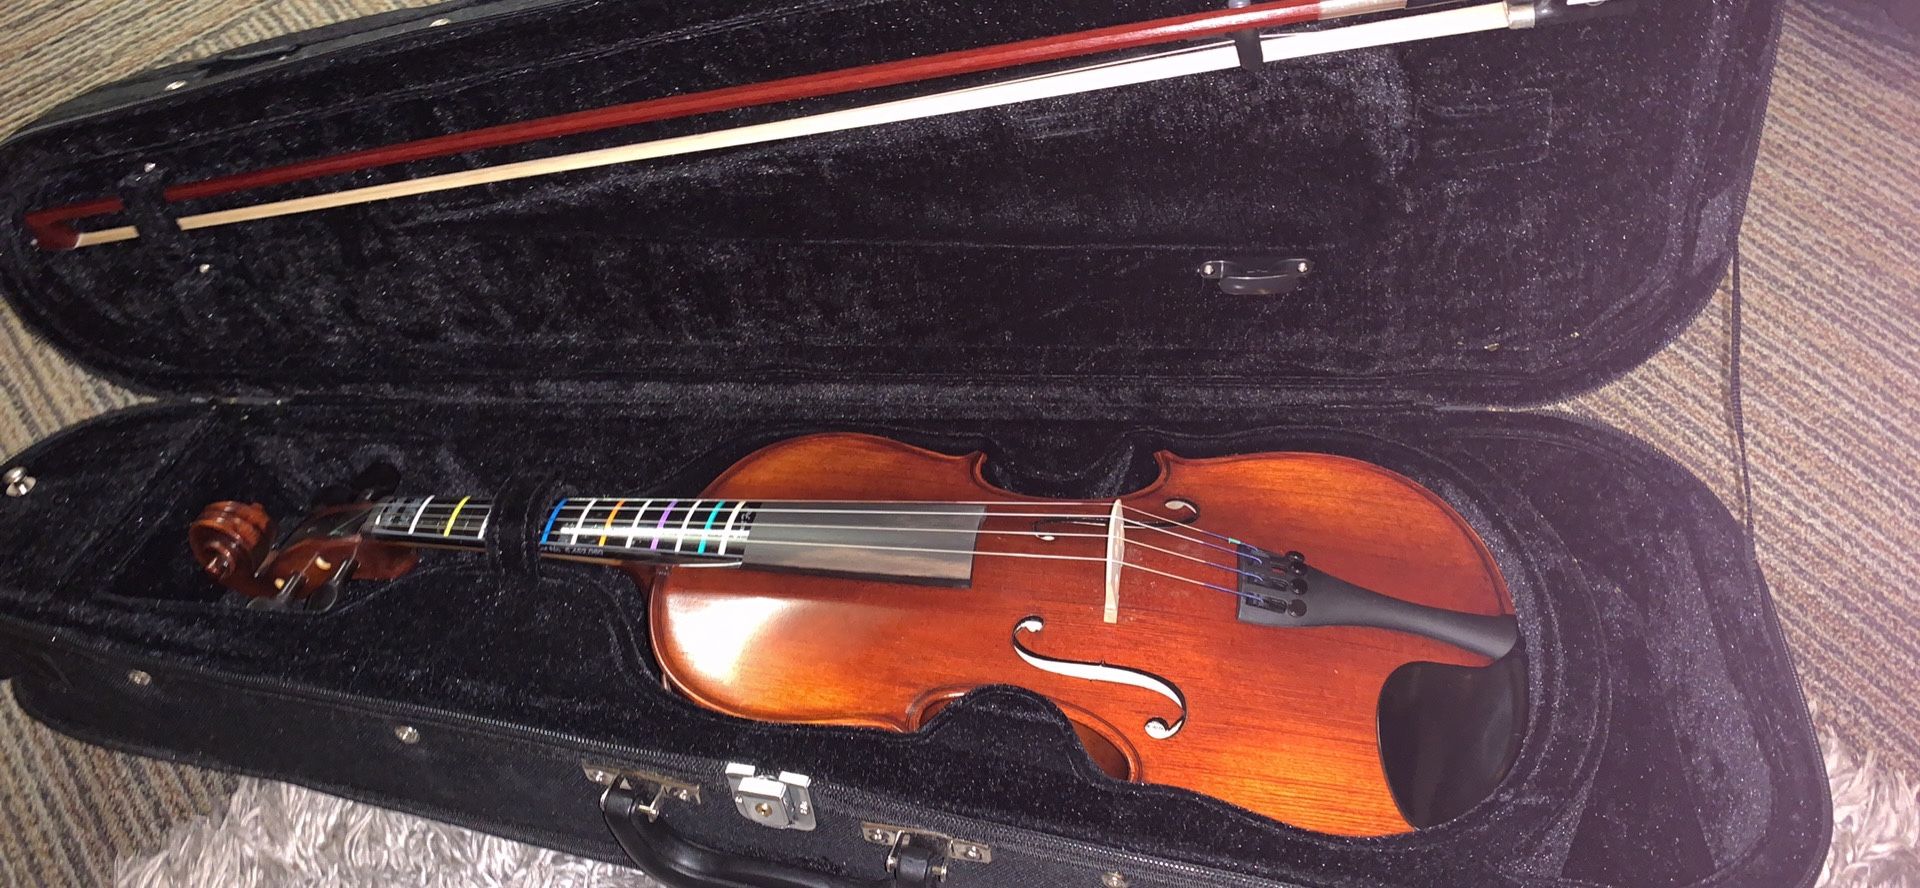 Bellafina Violin